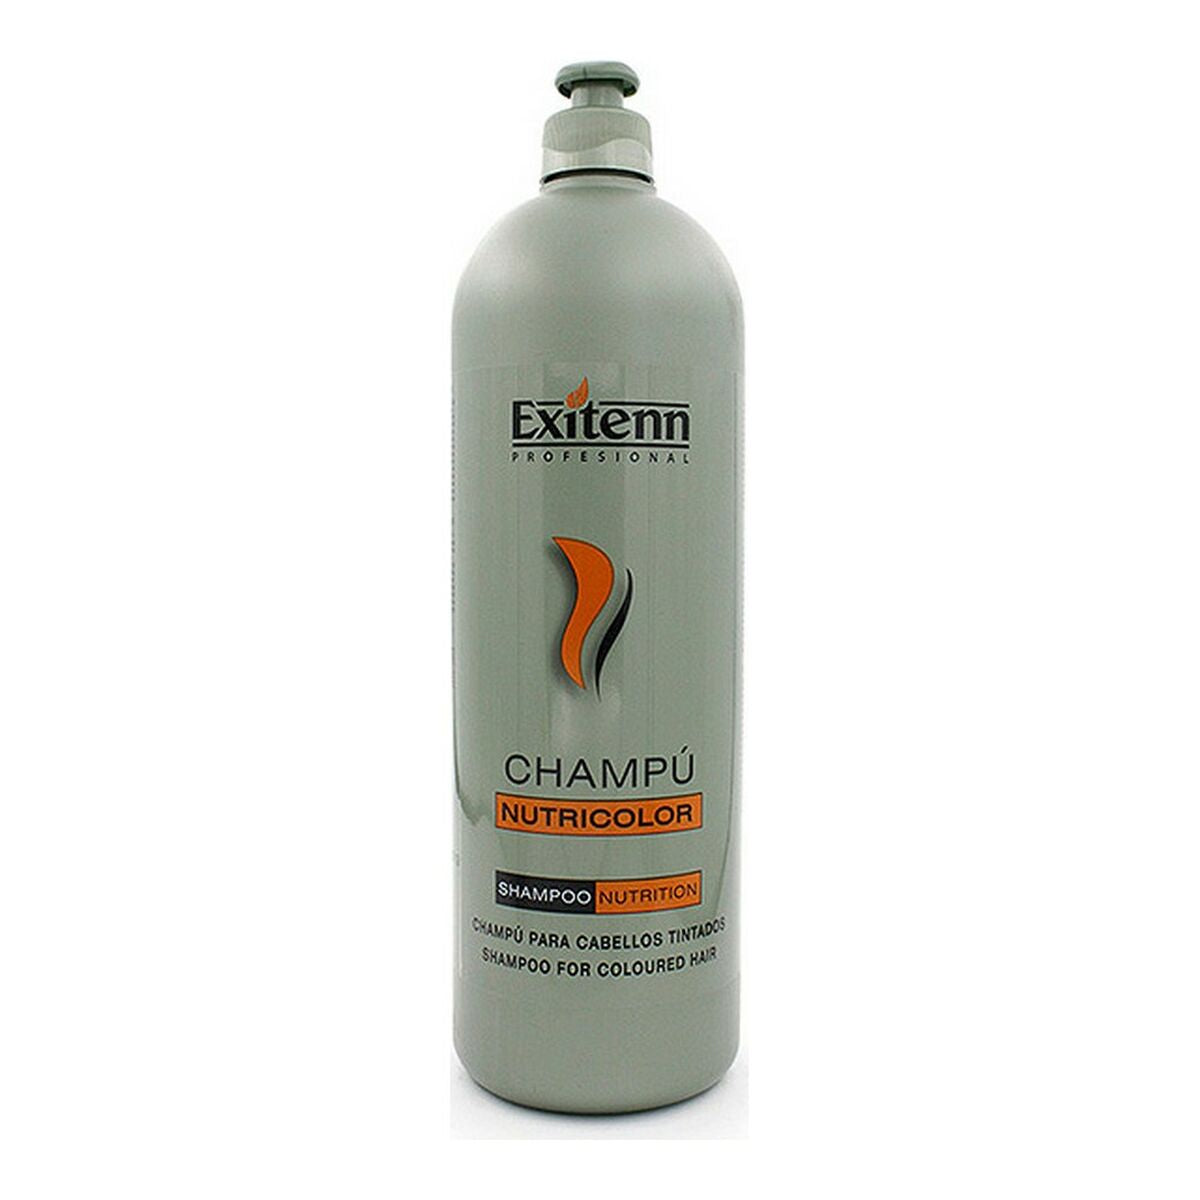 Shampoo Nutricolor Exitenn